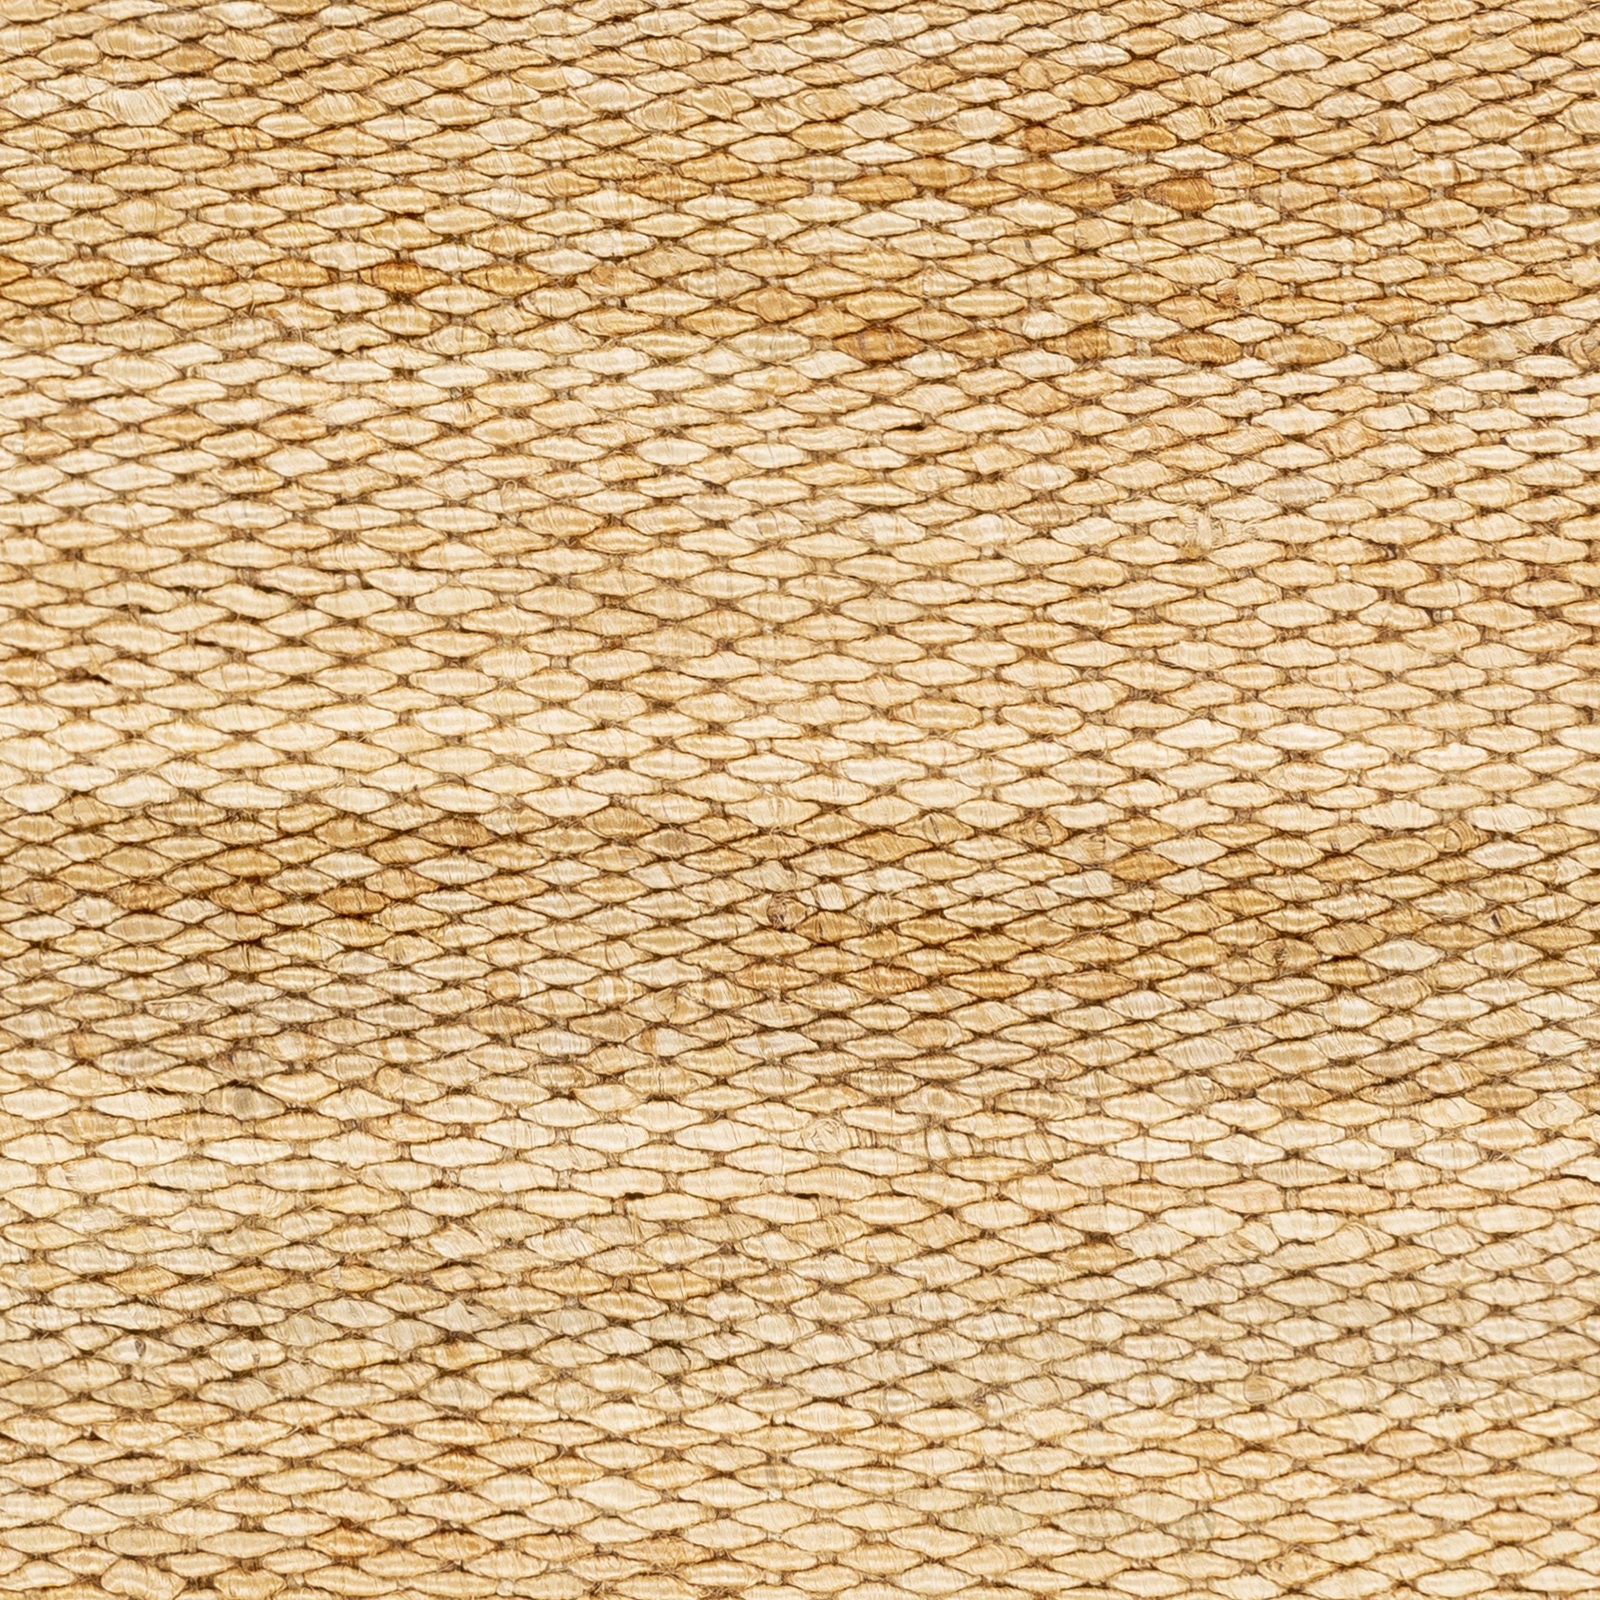 Costa Rug, 10' x 14' - Image 2